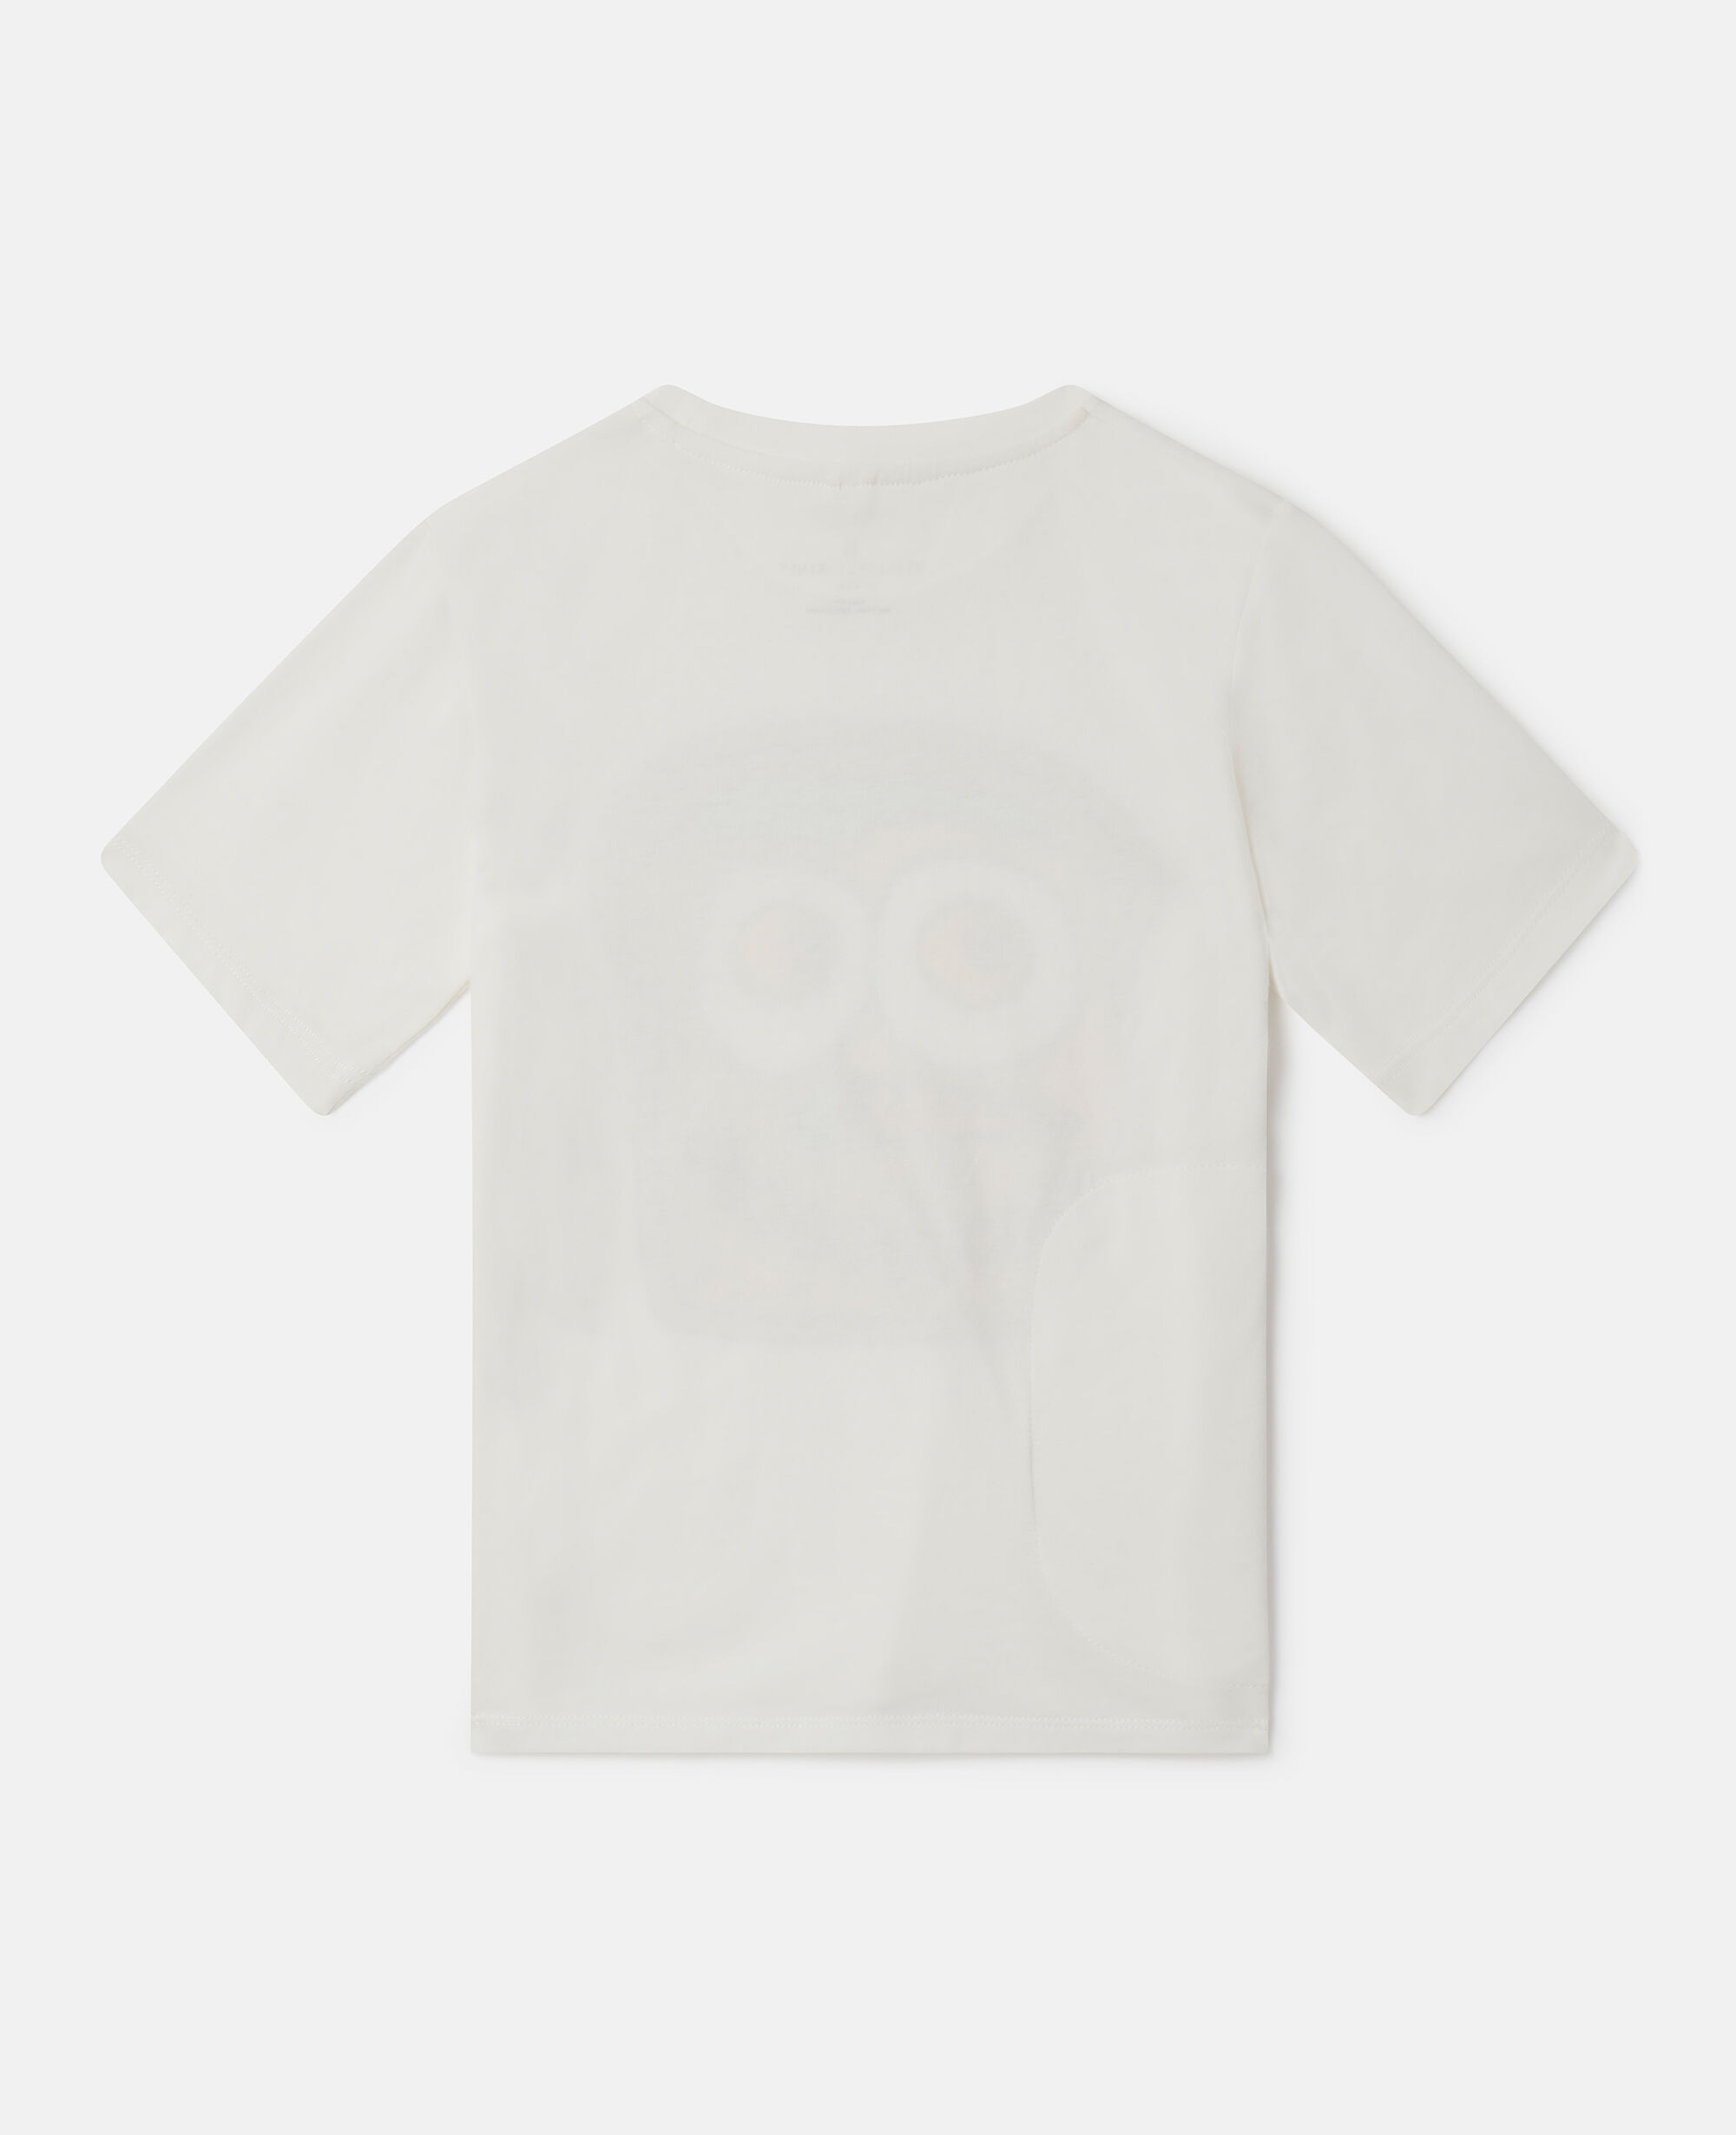 Boys T-Shirts | Printed T-Shirts & Tops | Stella McCartney Kids US